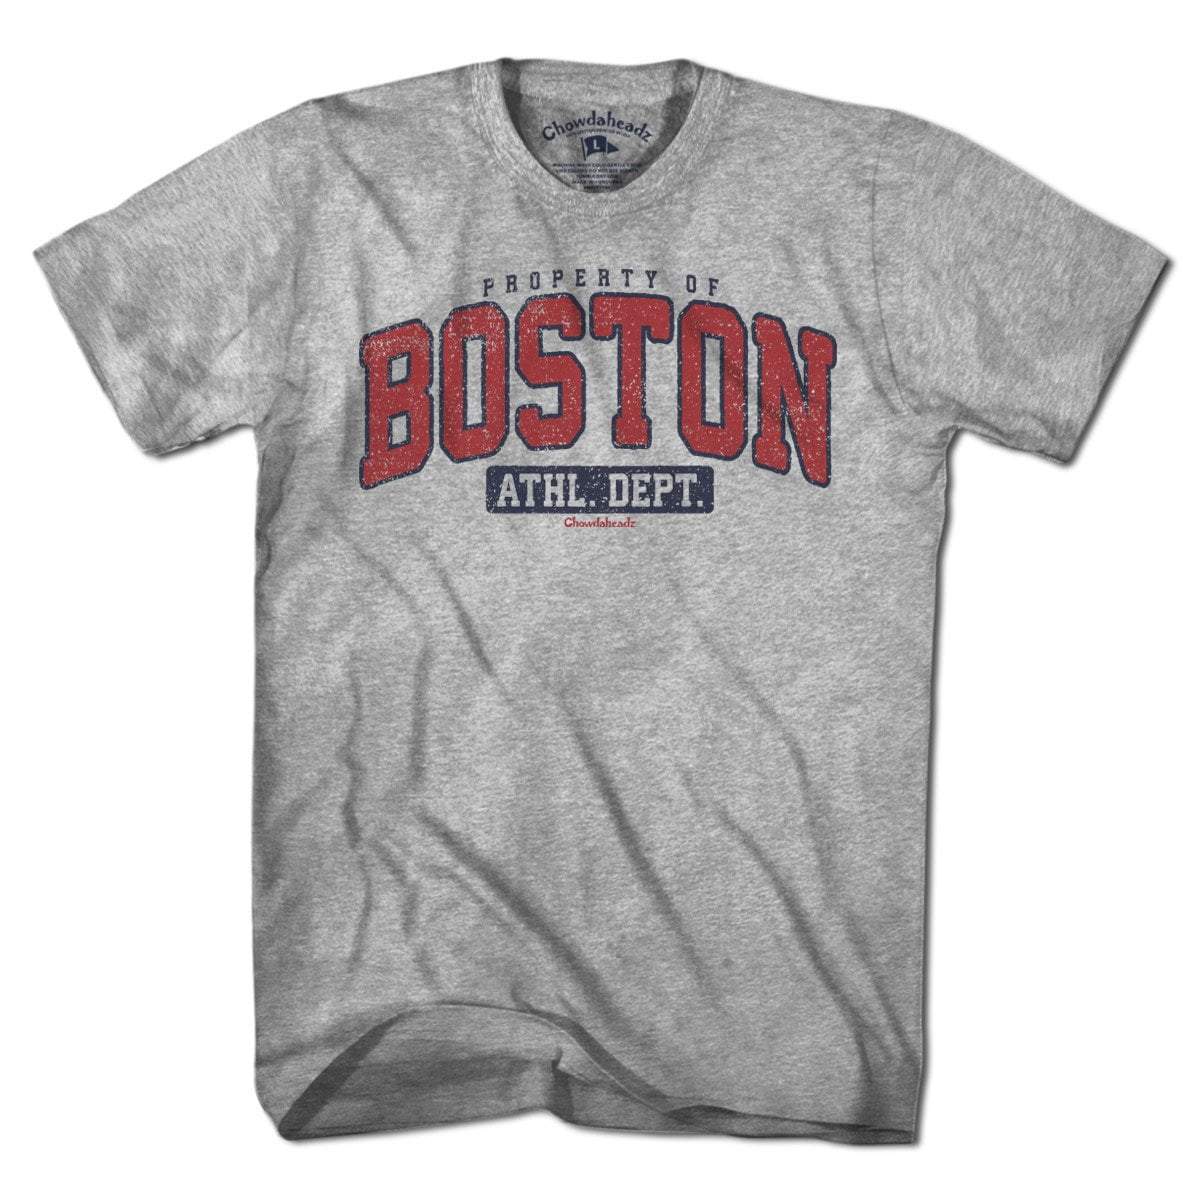 Vintage Distressed Boston Red Sox T-Shirt